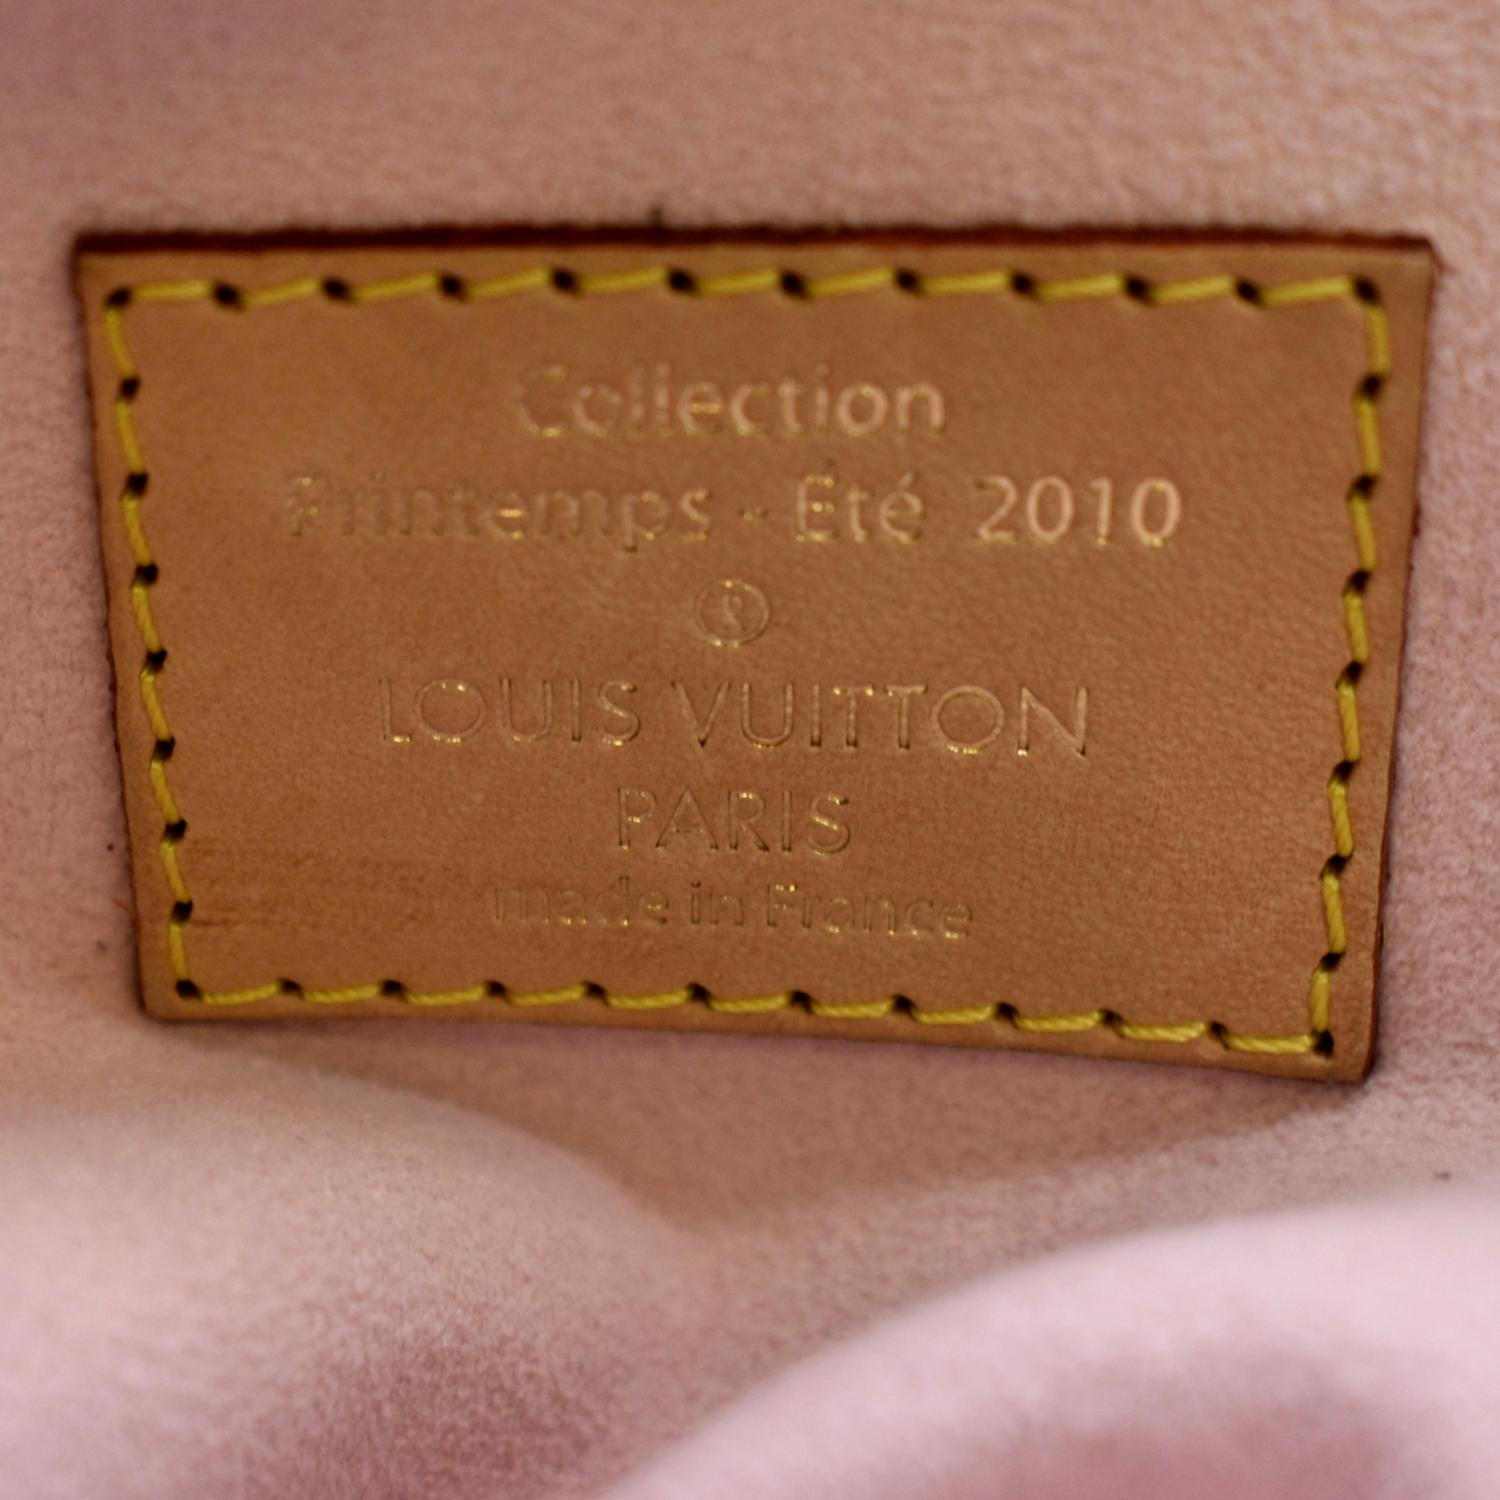 Louis Vuitton Rose Monogram Denim Limited Edition Sunshine Bag at 1stDibs   louis vuitton sunshine bag, louis vuitton pink denim bag, pink louis vuitton  denim bag